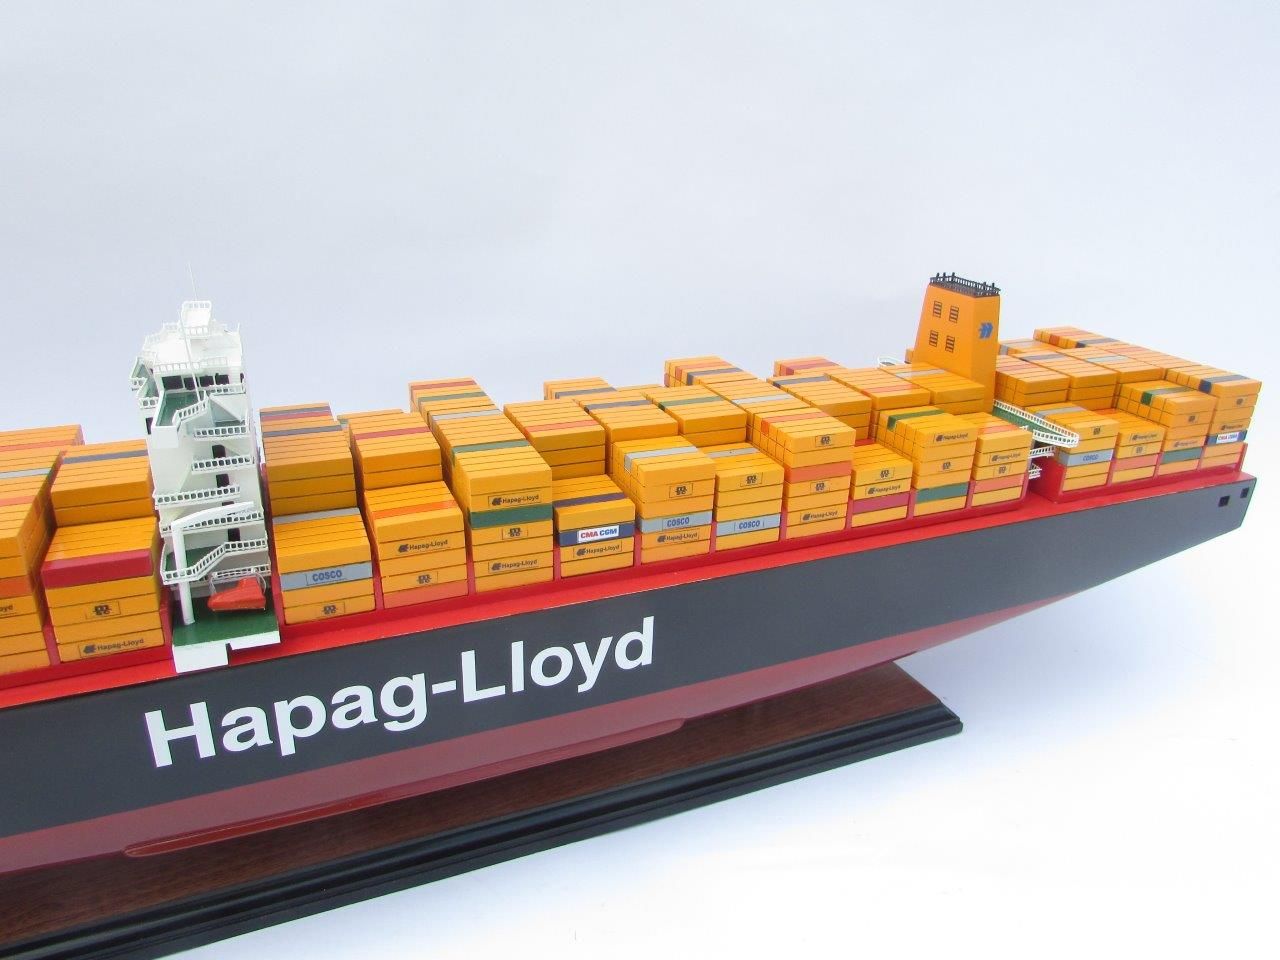 Hapag Lloyd Hamburg Express (Standard Range) - GN